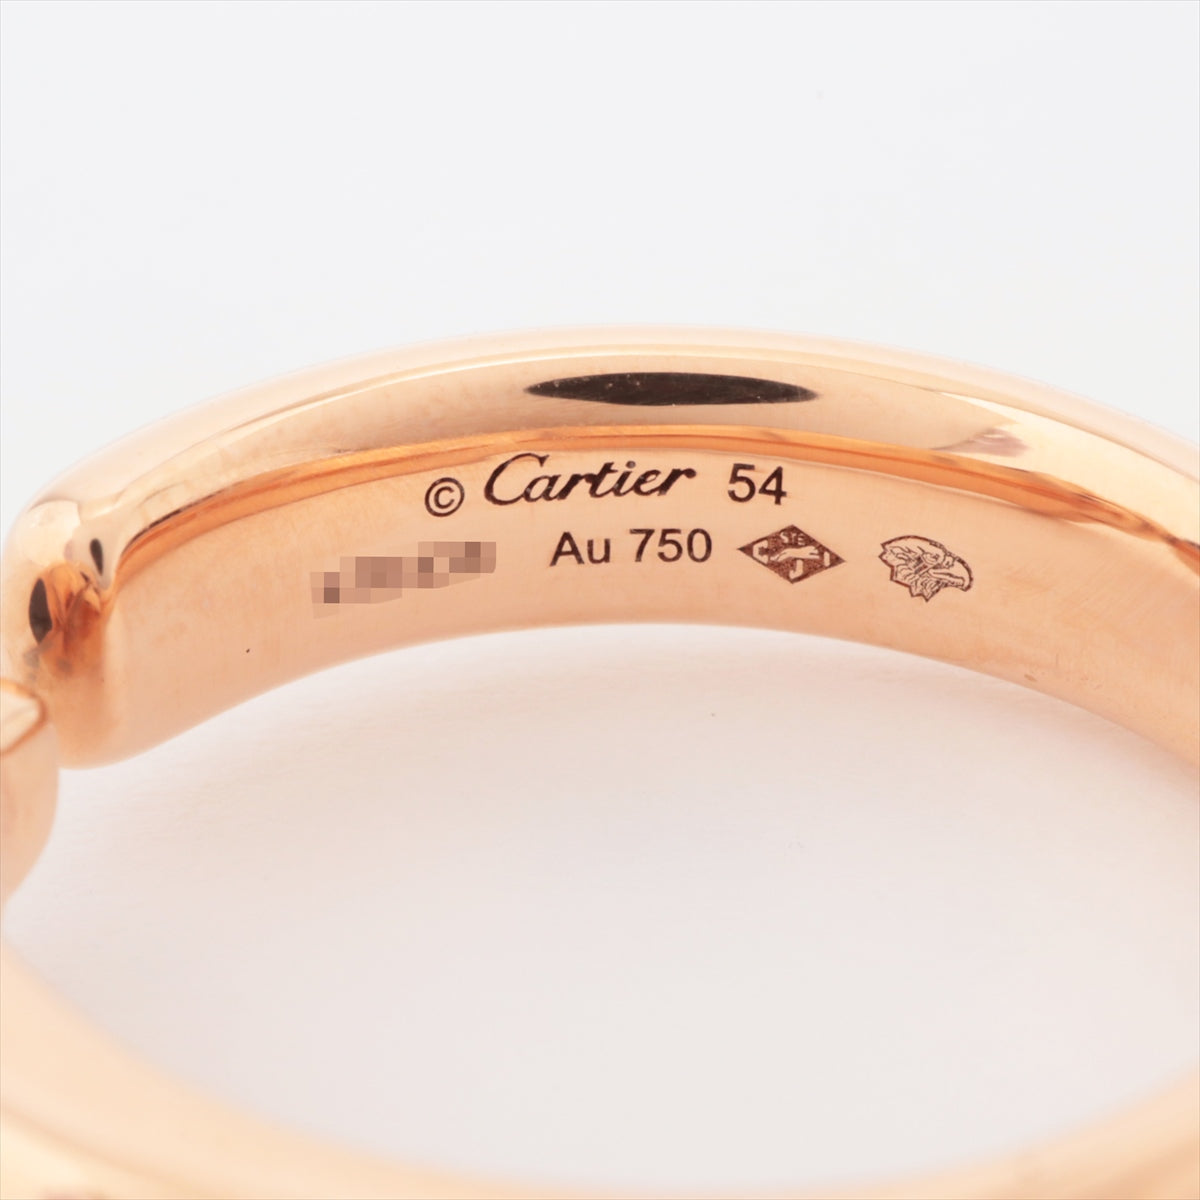 Cartier Panthère Tsavorite Onyx rings 750(PG) 10.6g 54